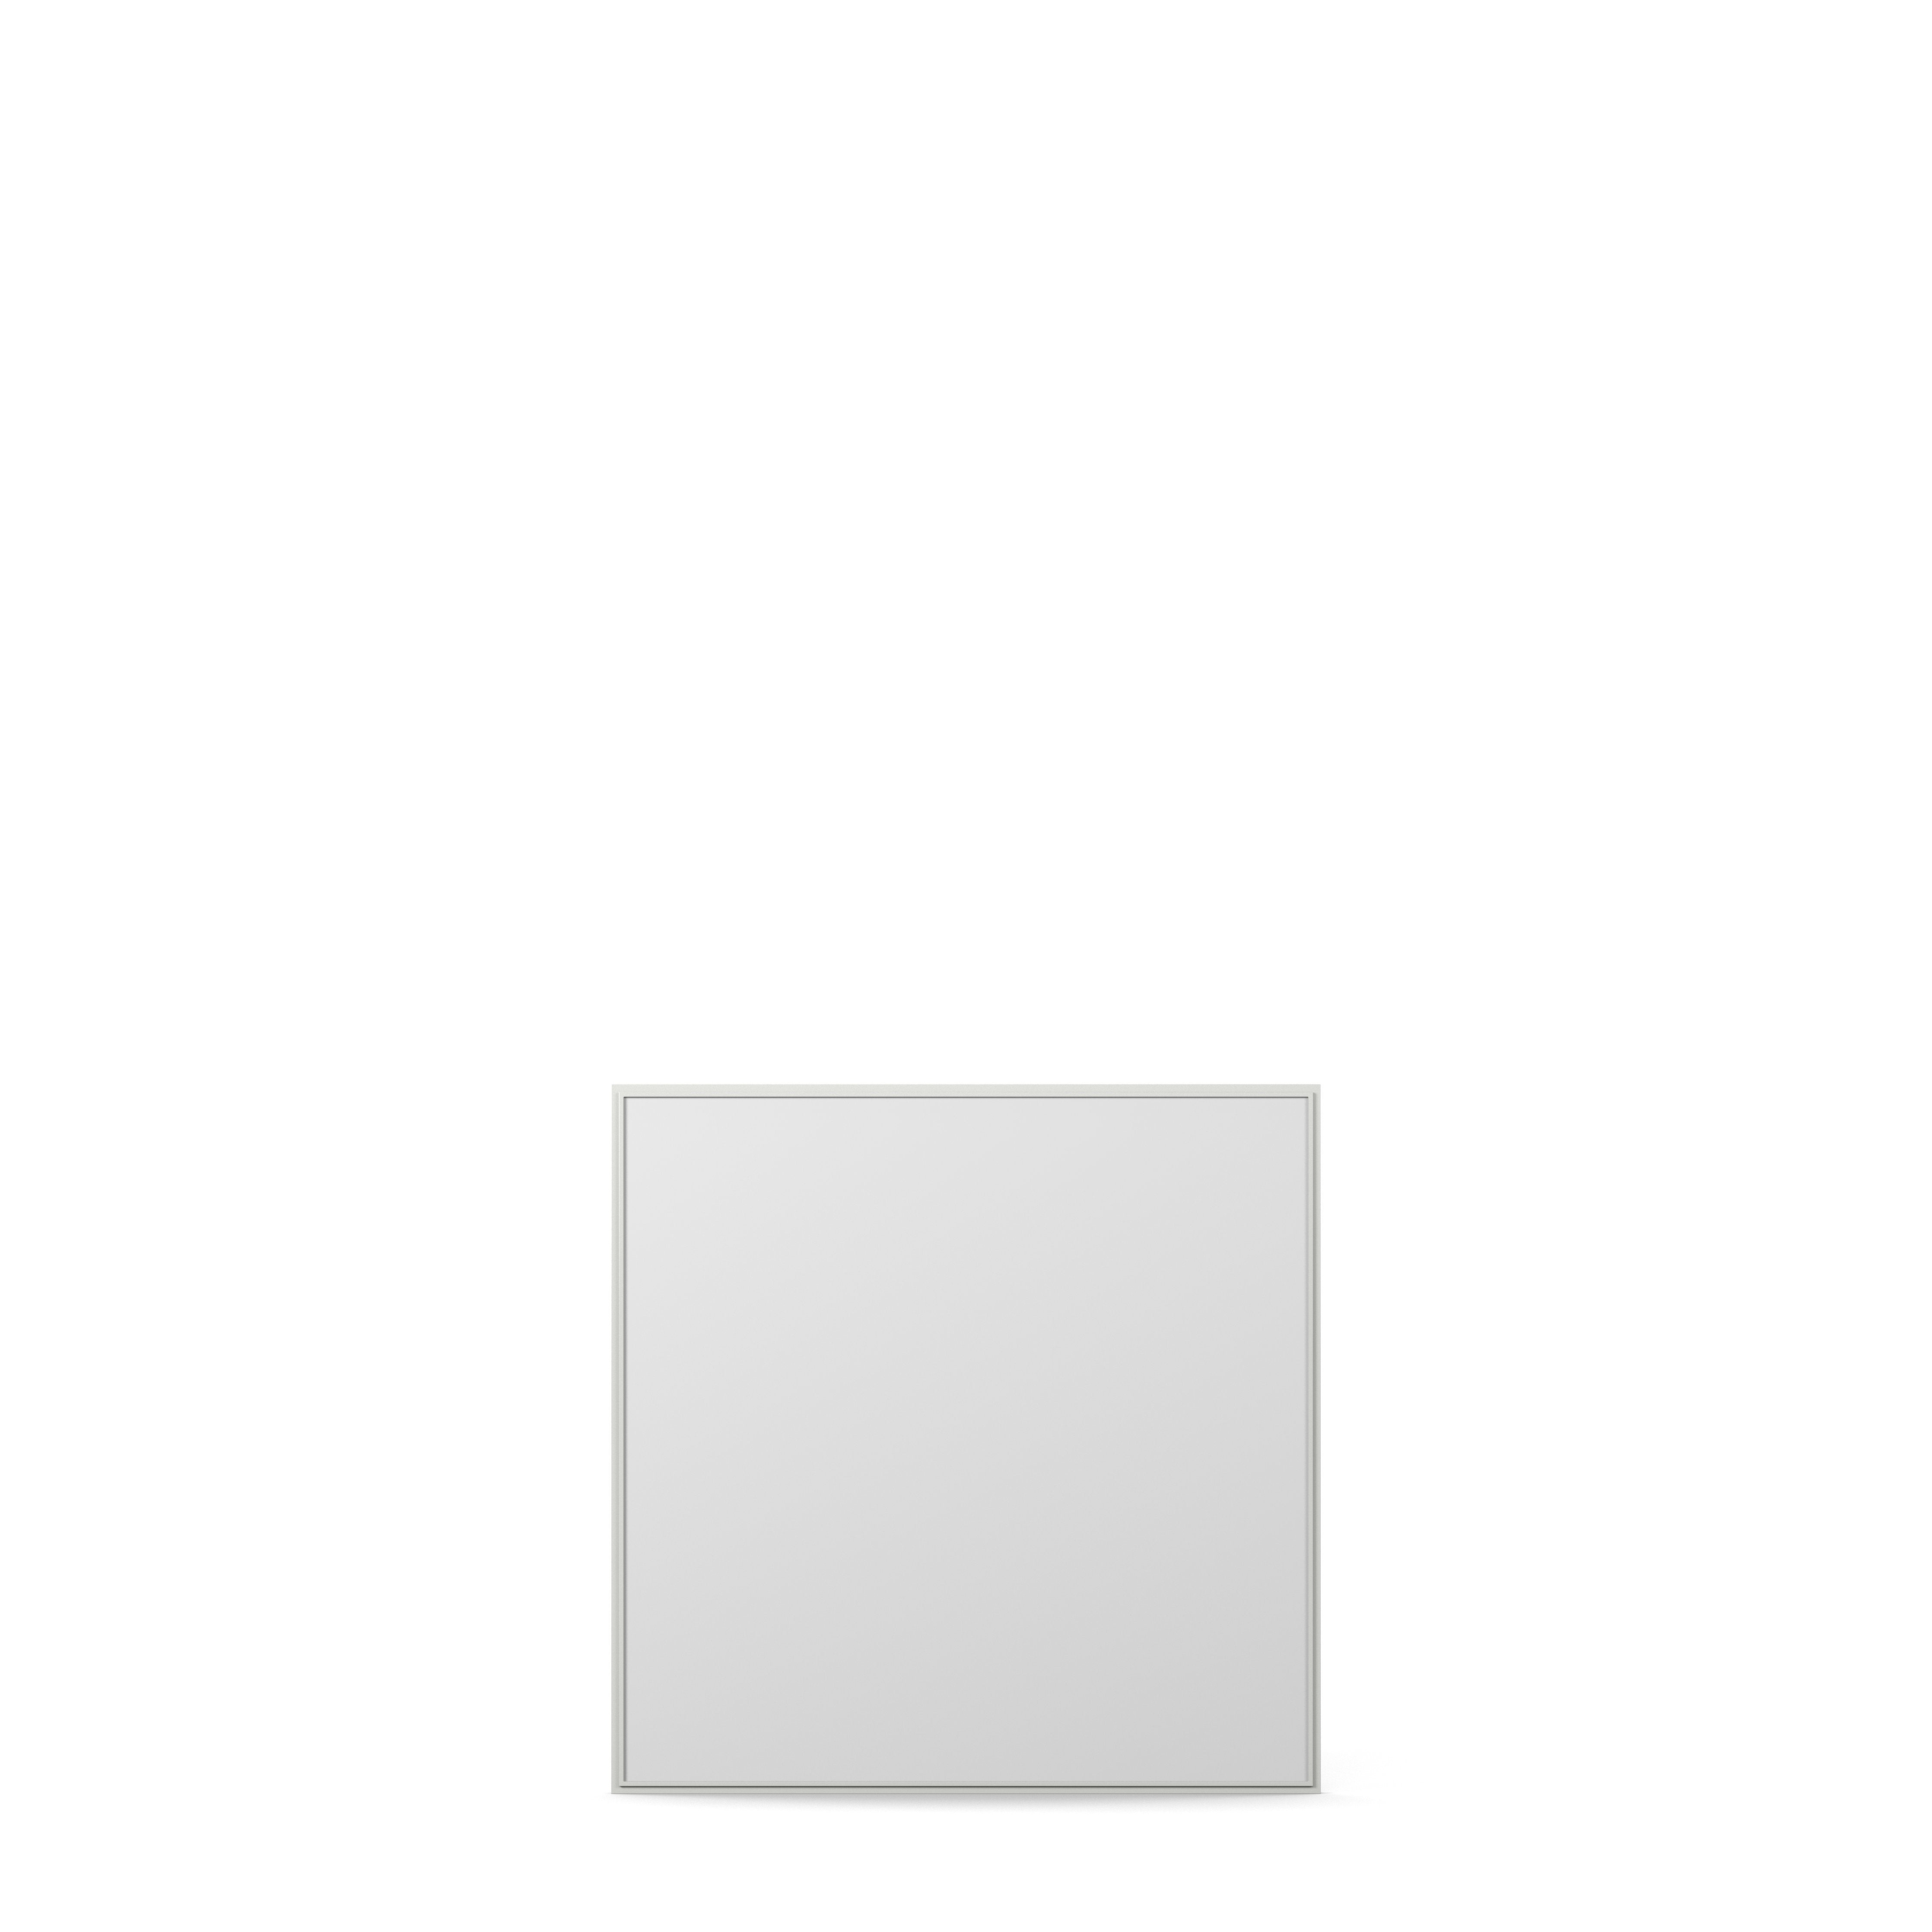 Englesson Speglar Edge White Cube Spegel Kvadratisk 830D #färg_Edge White #Colour_Edge White